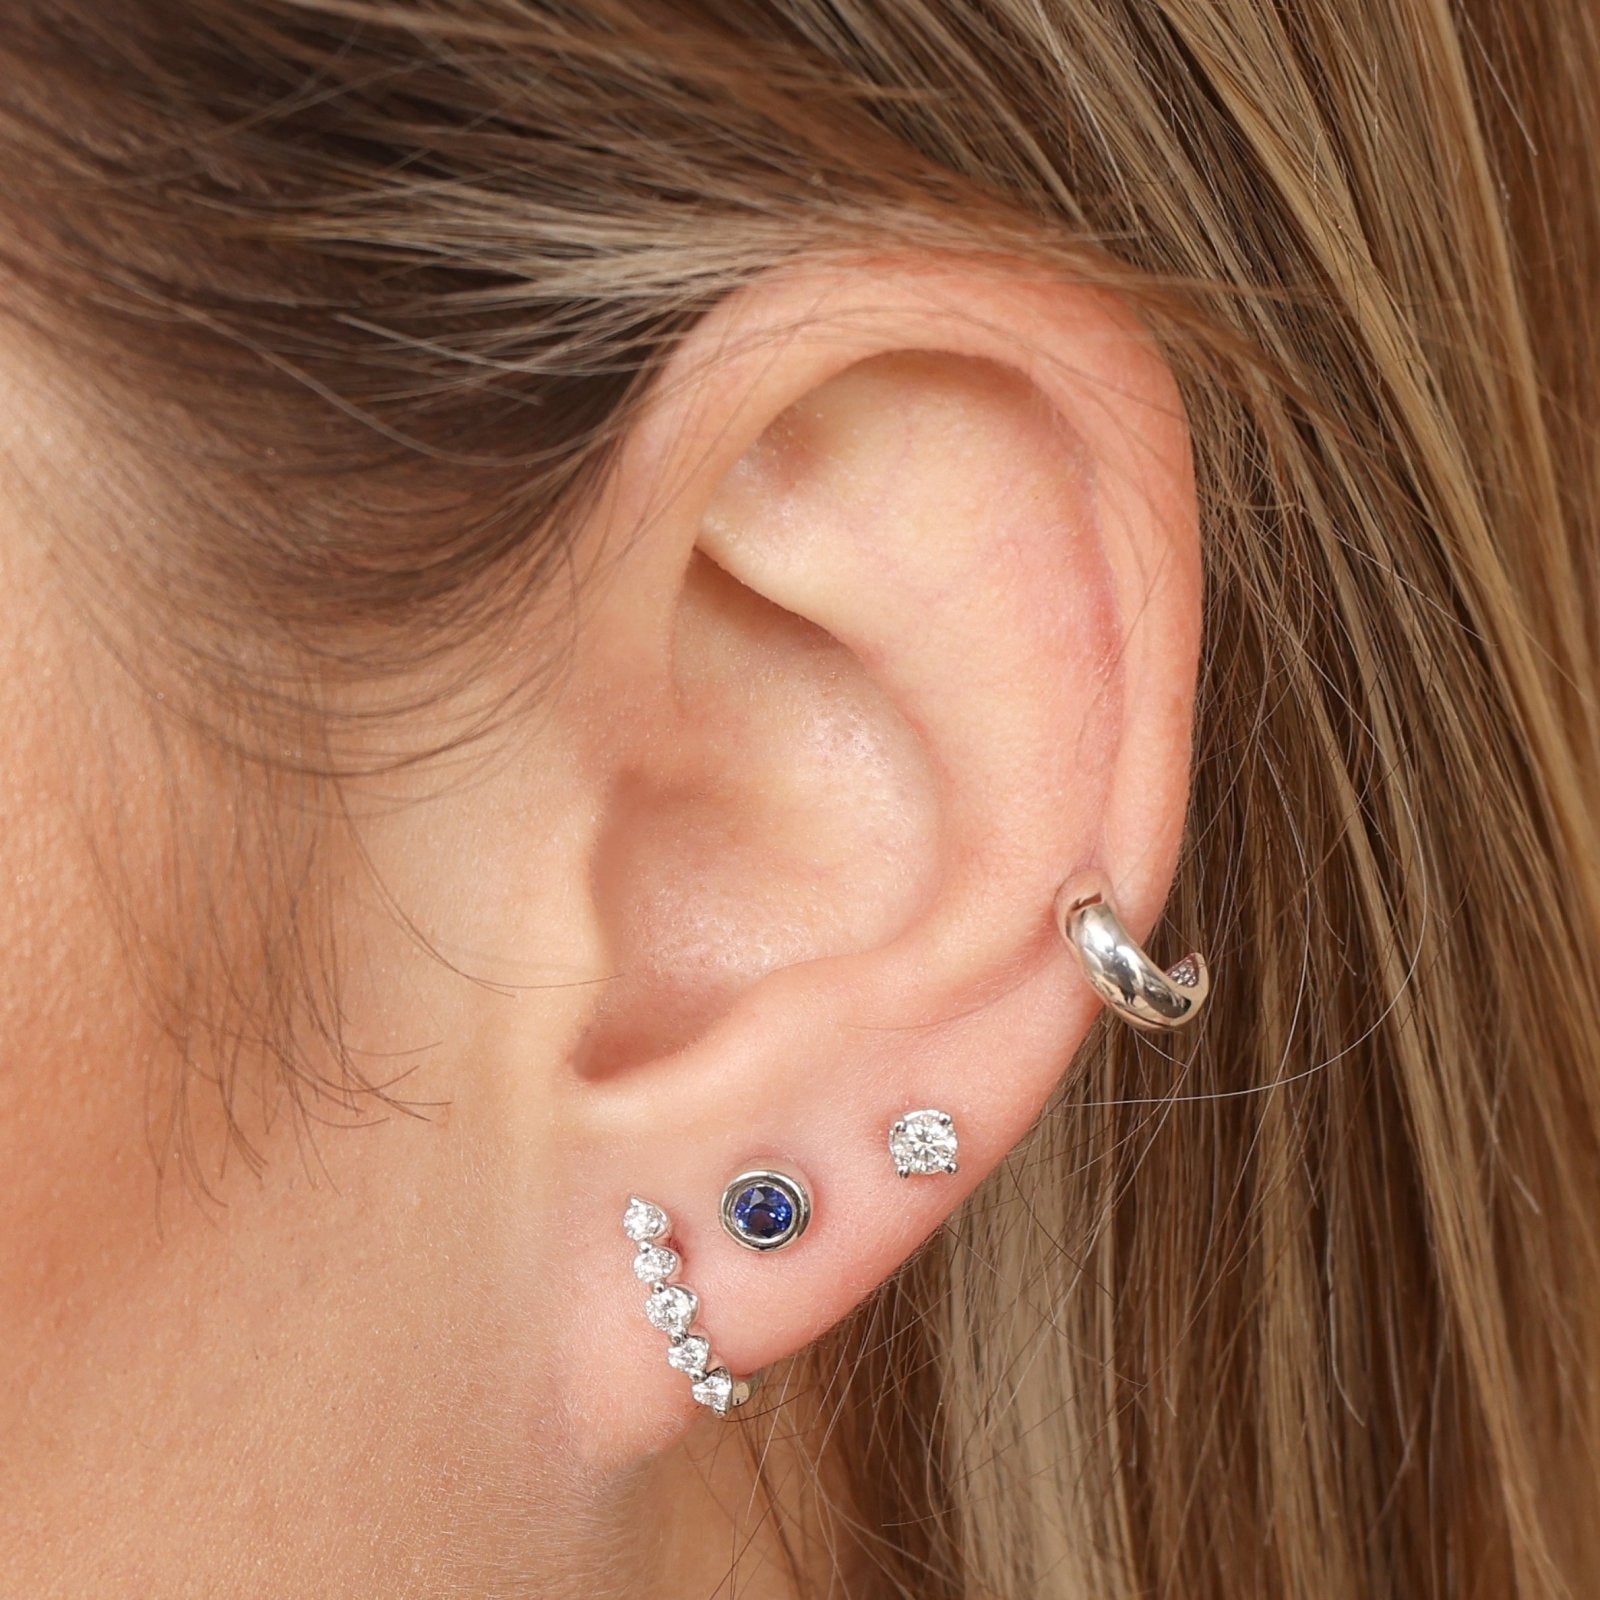 Bezel Set Sapphire Threaded Earring Earrings Estella Collection #product_description# 14k Birthstone Birthstone Earrings #tag4# #tag5# #tag6# #tag7# #tag8# #tag9# #tag10#